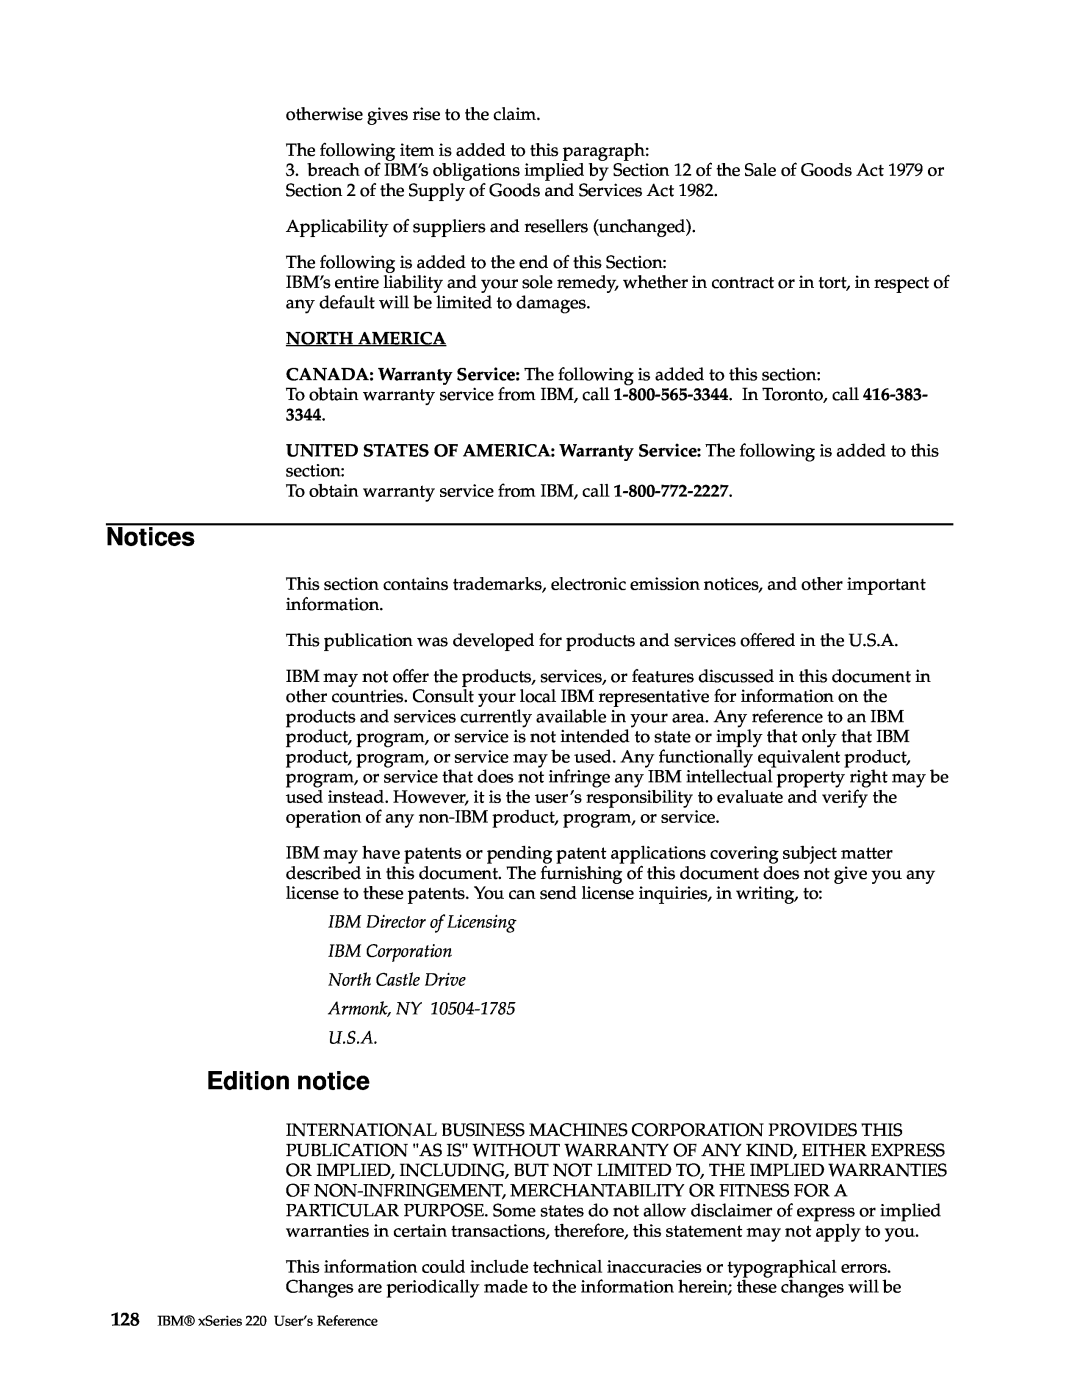 IBM 220 manual Notices, Edition notice, North America, IBM Director of Licensing IBM Corporation North Castle Drive 